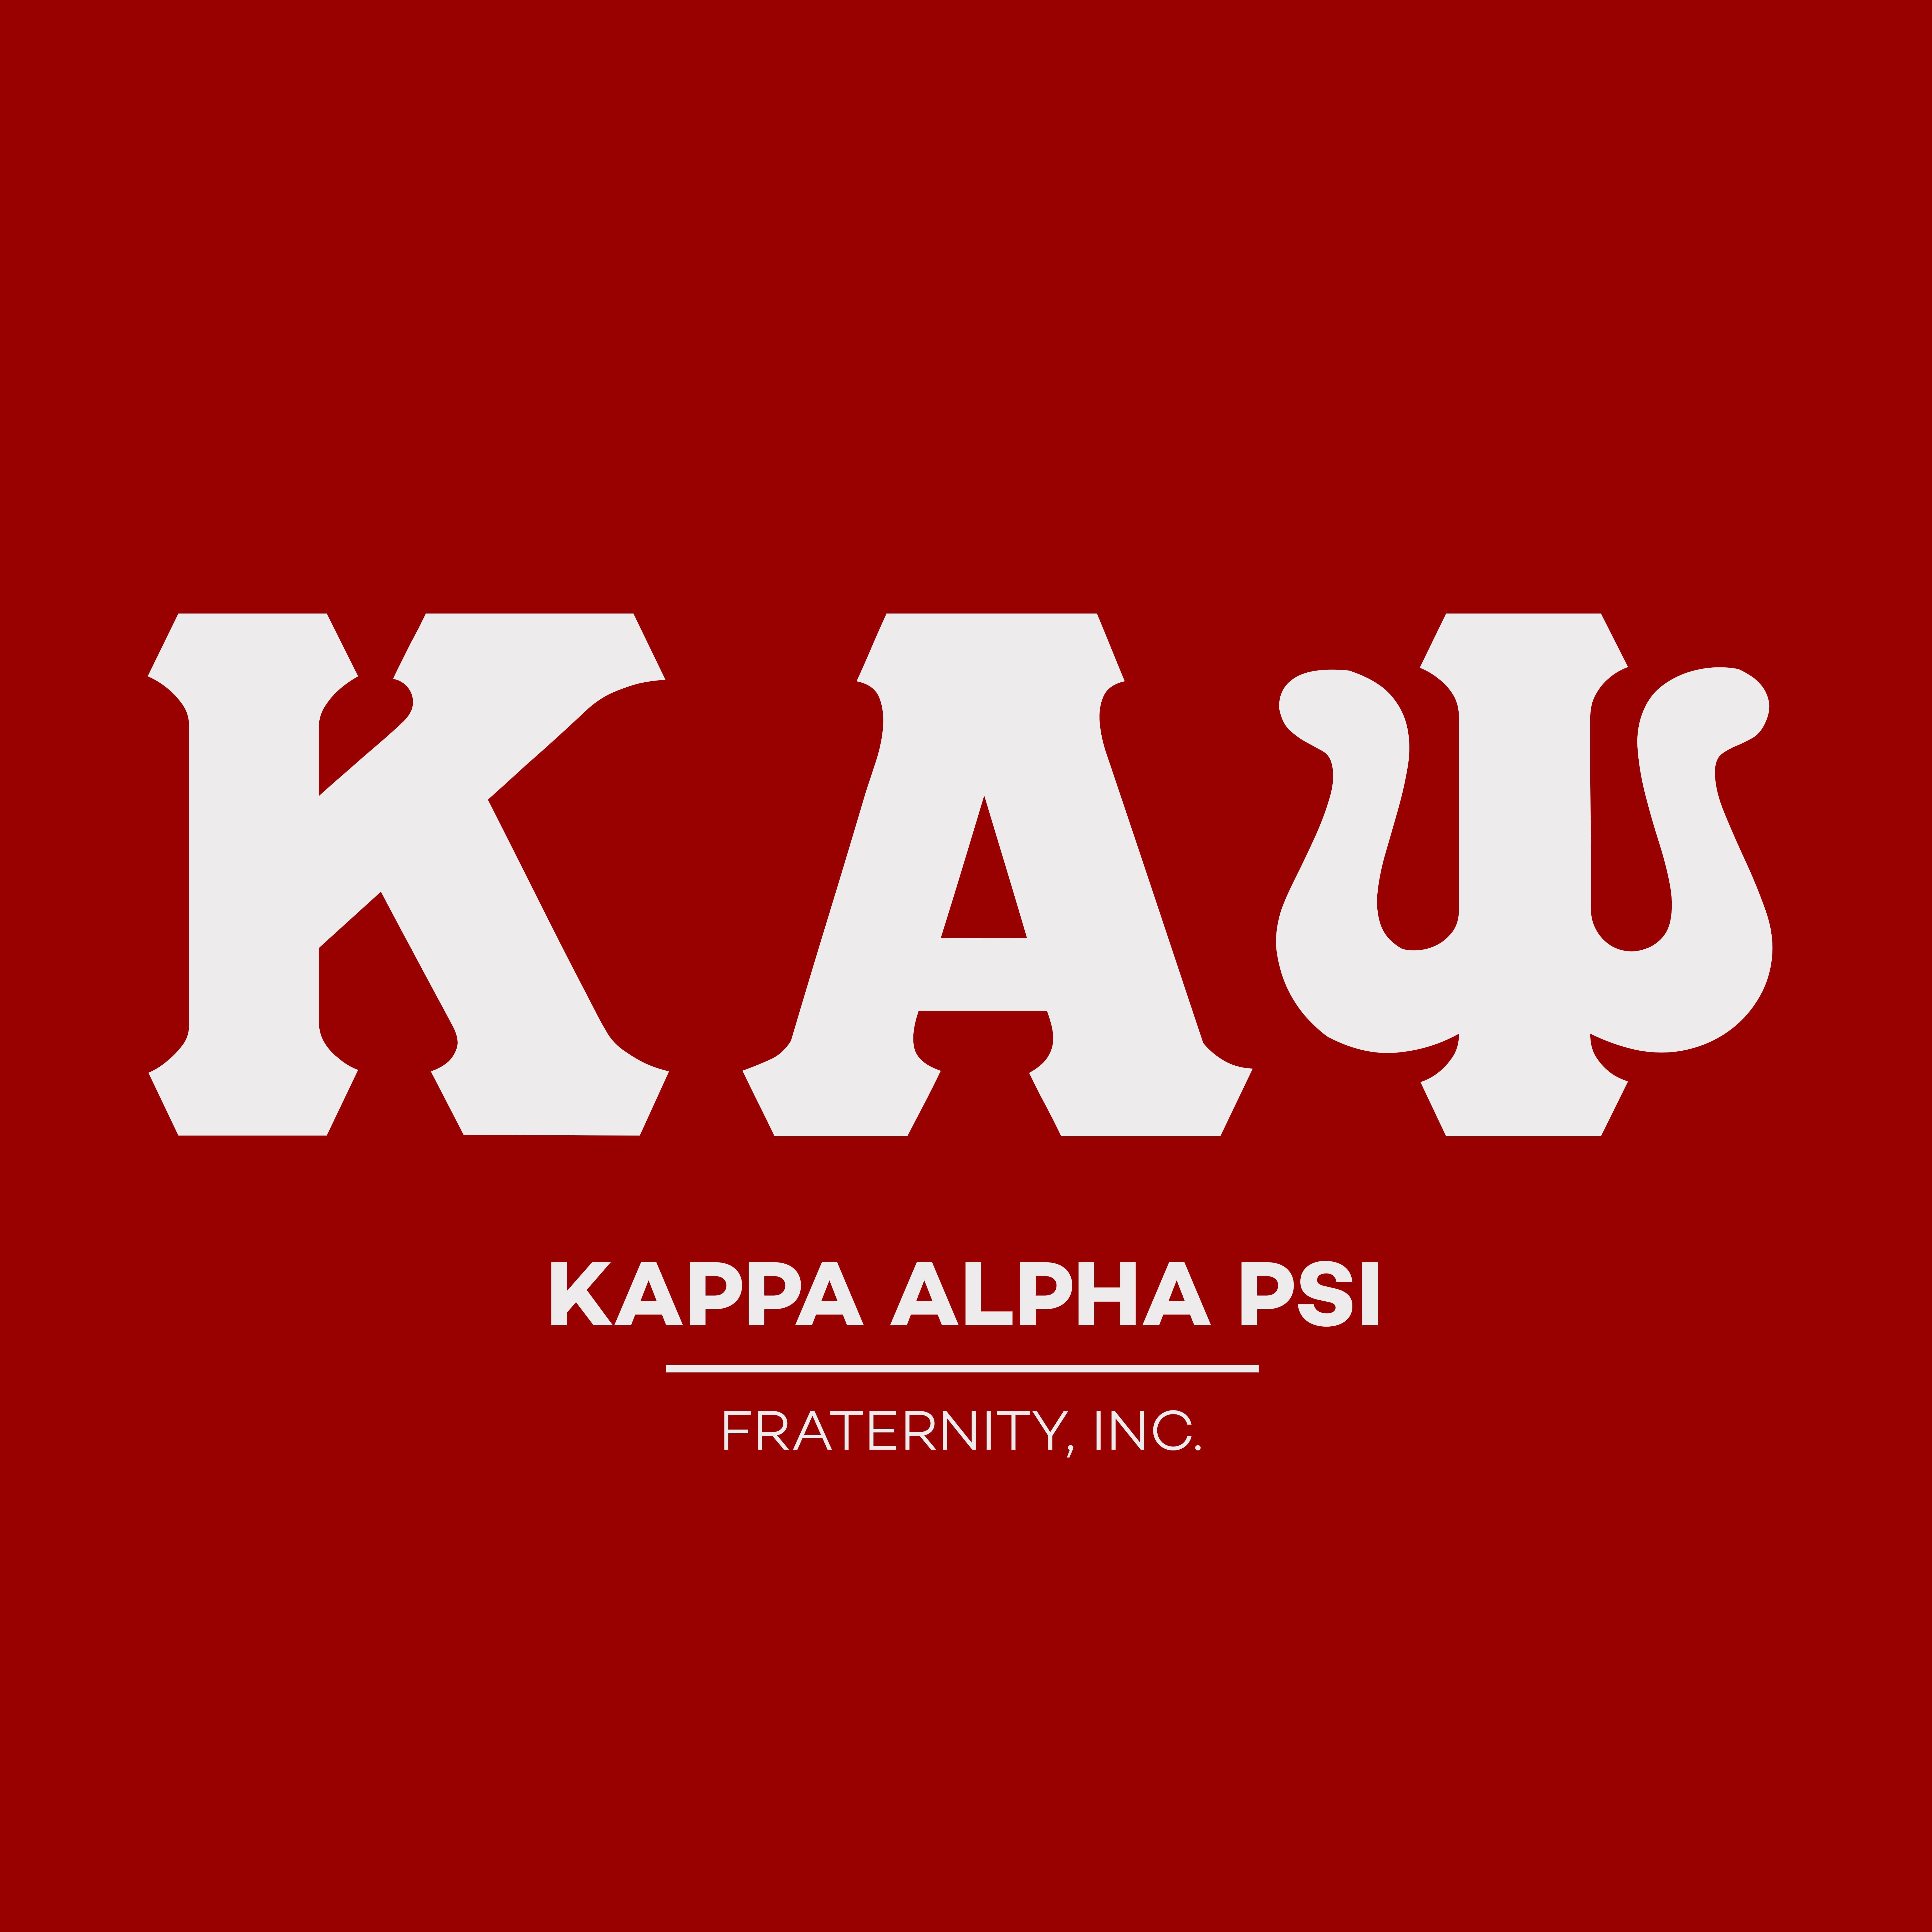 Kappa Alpha Psi Fraternity, Inc.: Fraternity & Sorority Life - University